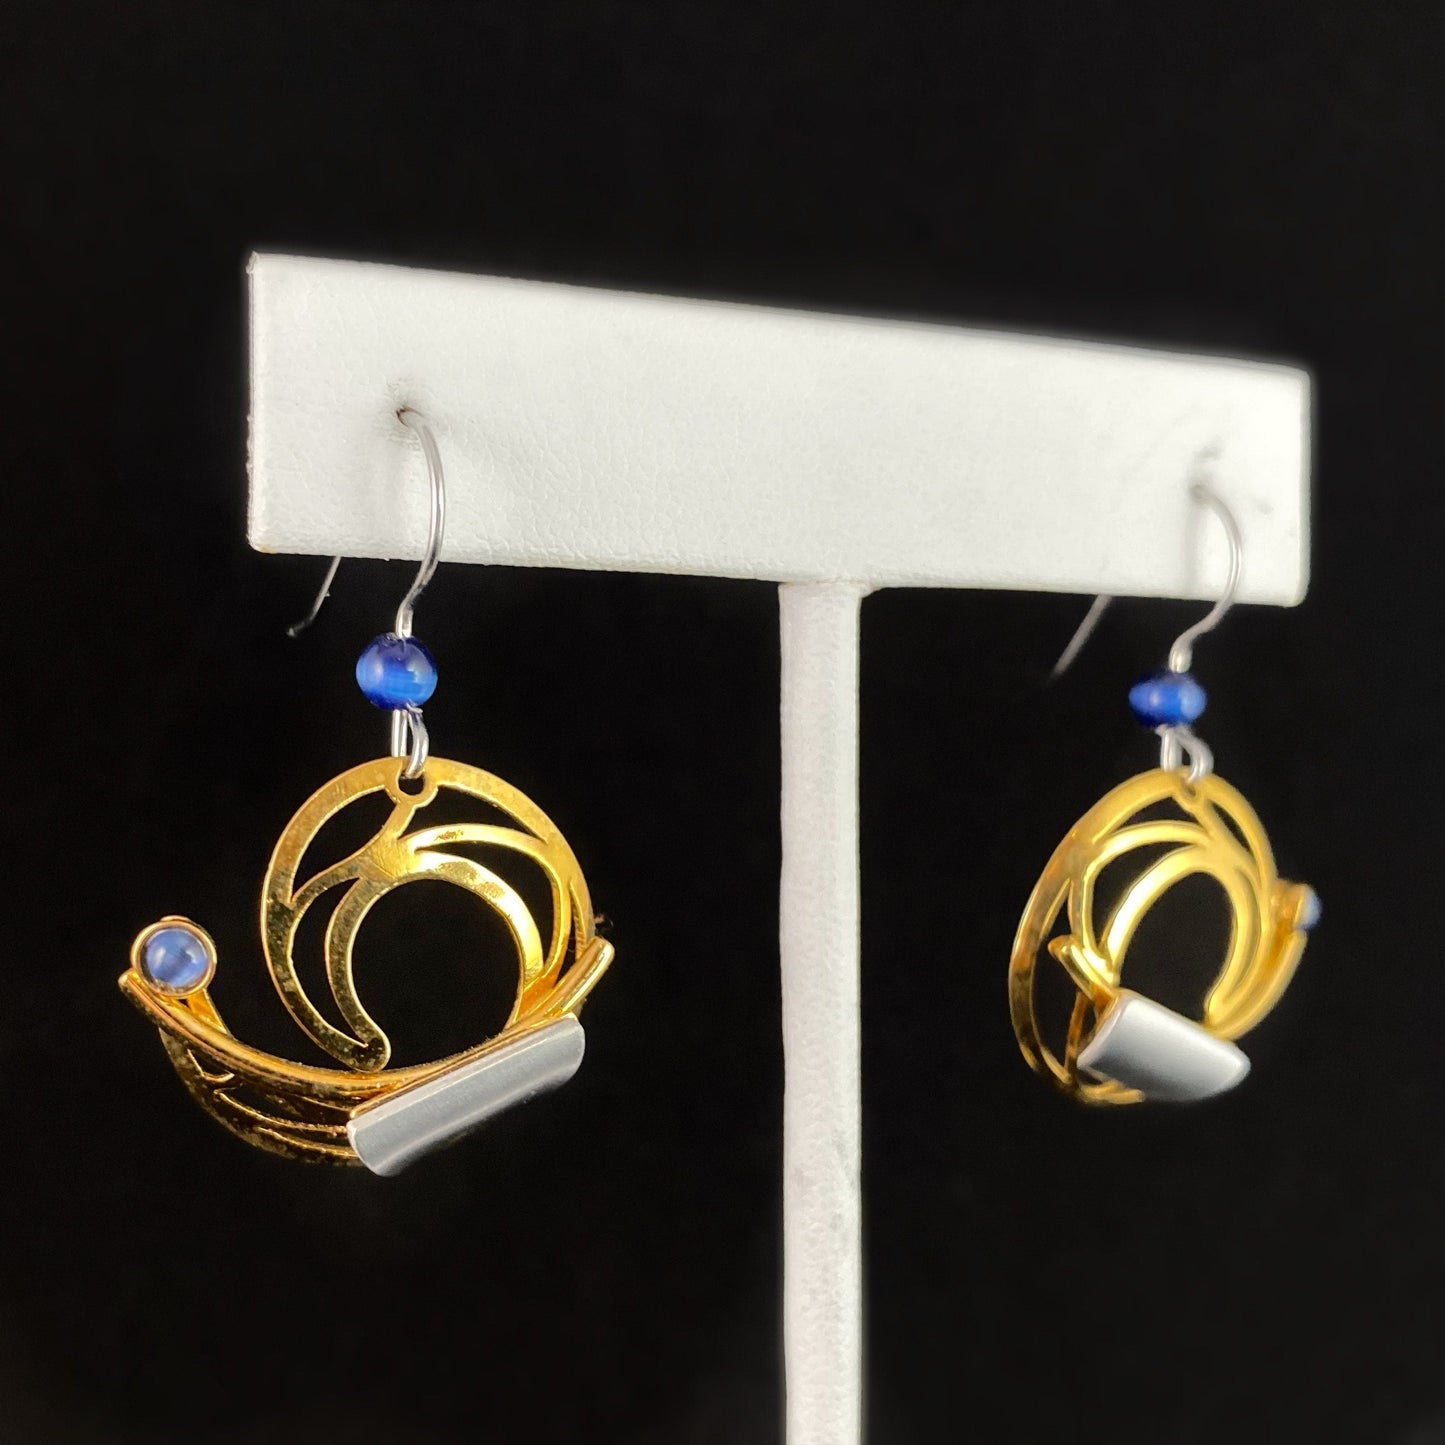 Lightweight Handmade Geometric Aluminum Earrings, Gold and Blue